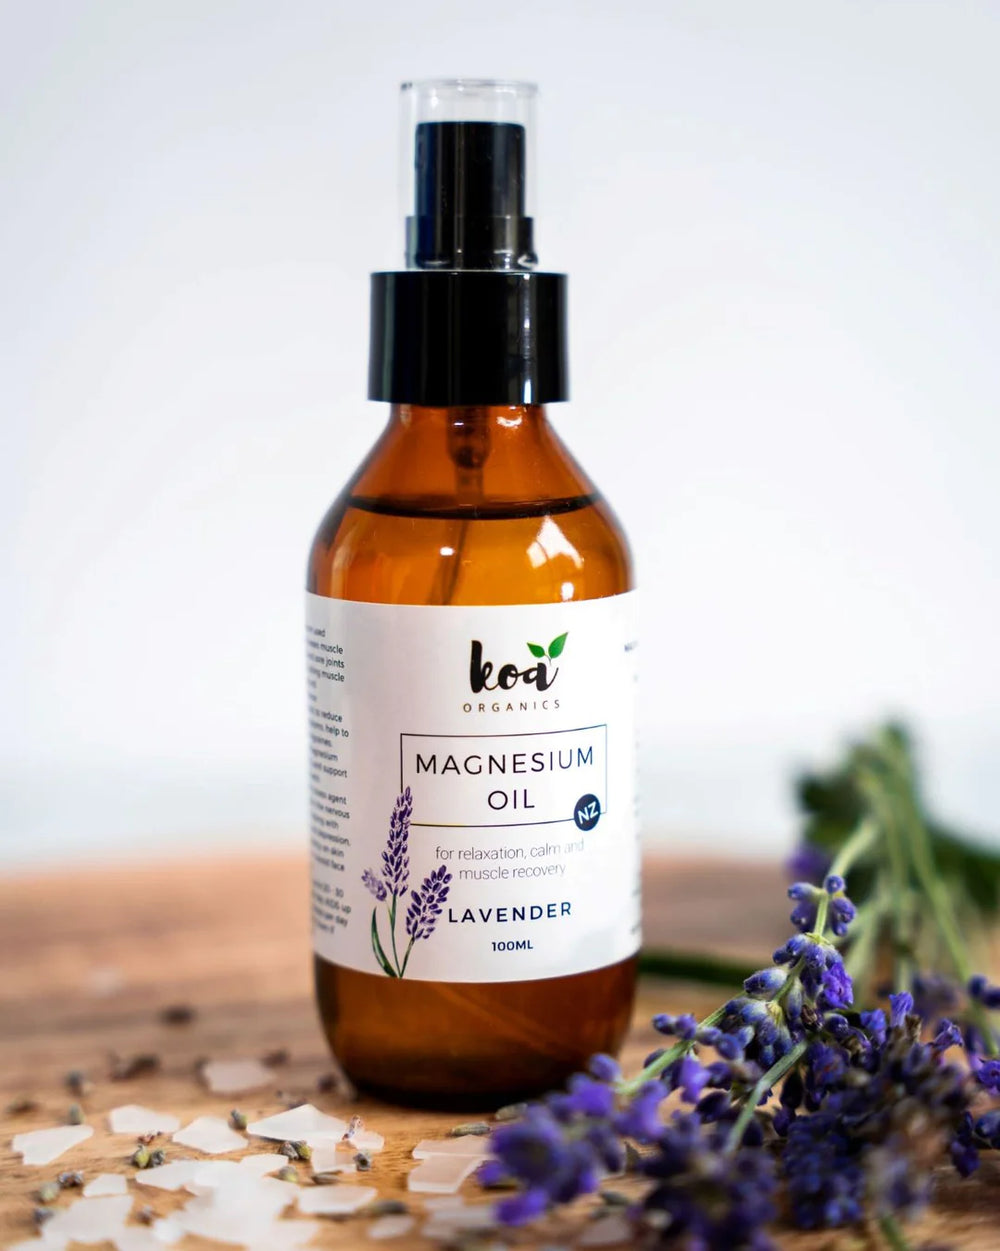 Koa Organics | Magnesium Oil with Lavender 100ml | Shut the Front Door